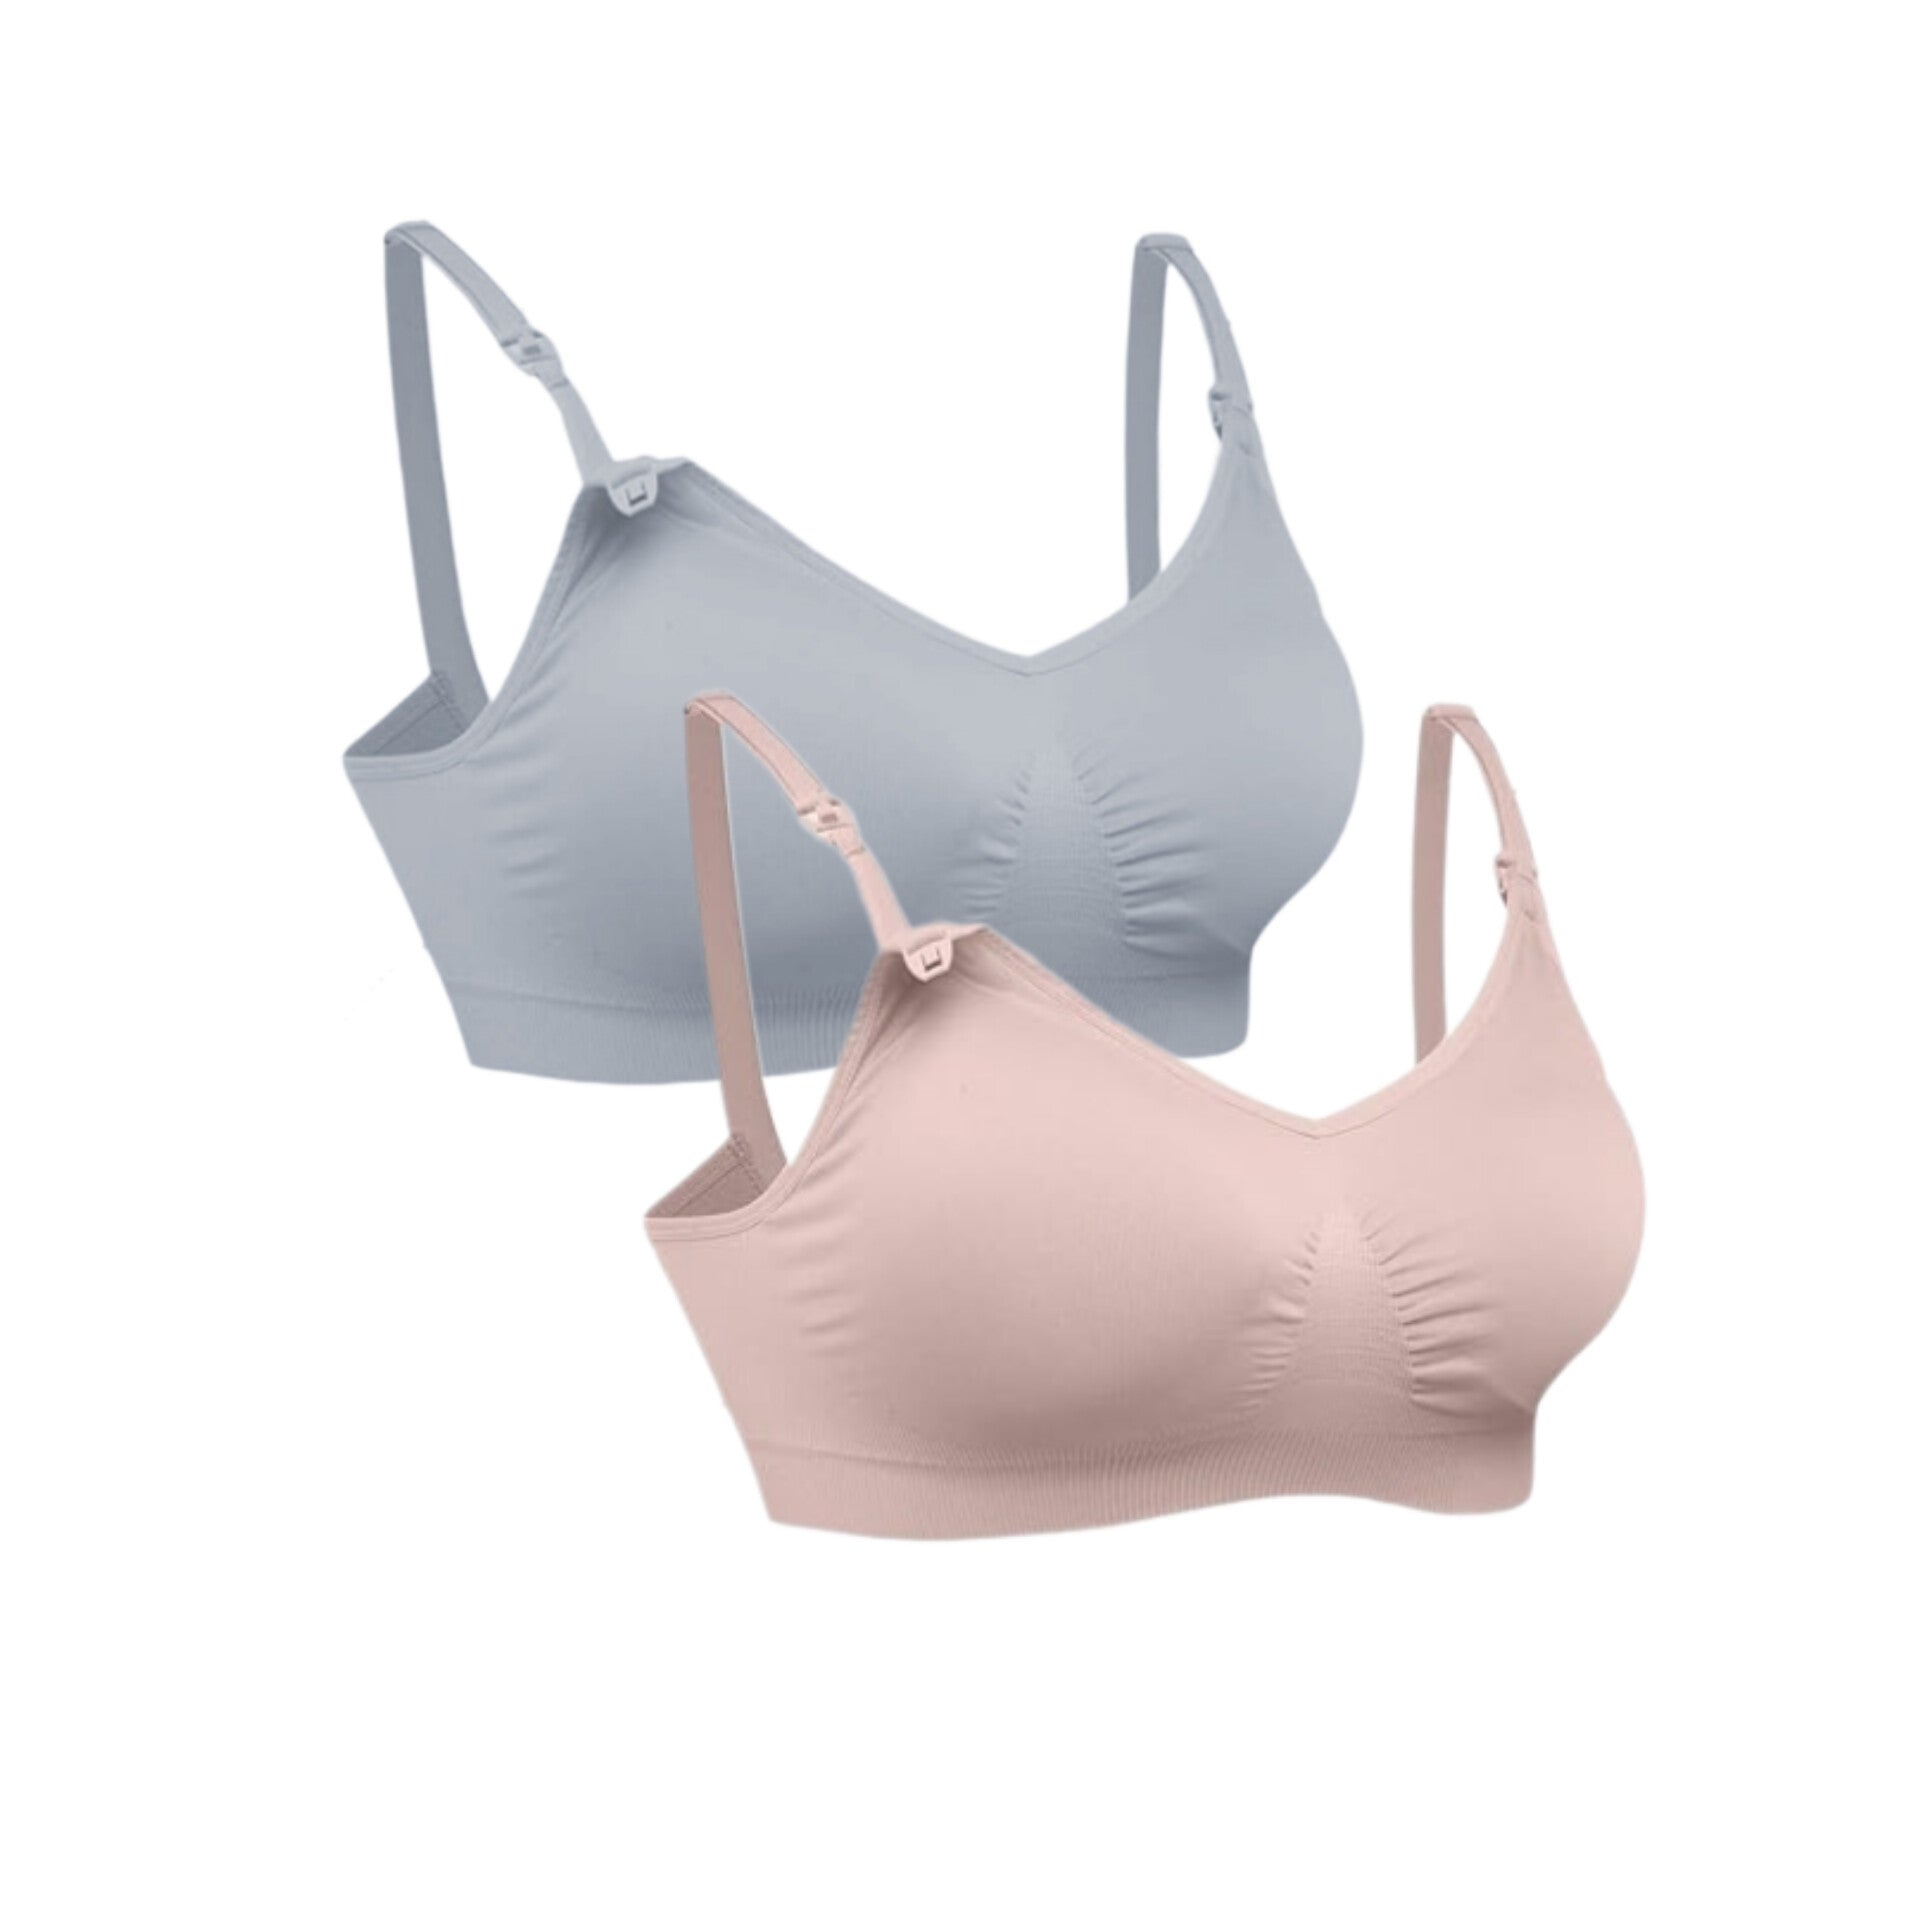 Hofish-Set de 2 sujetadores de lactancia sin costuras, rosa y gris, talla L